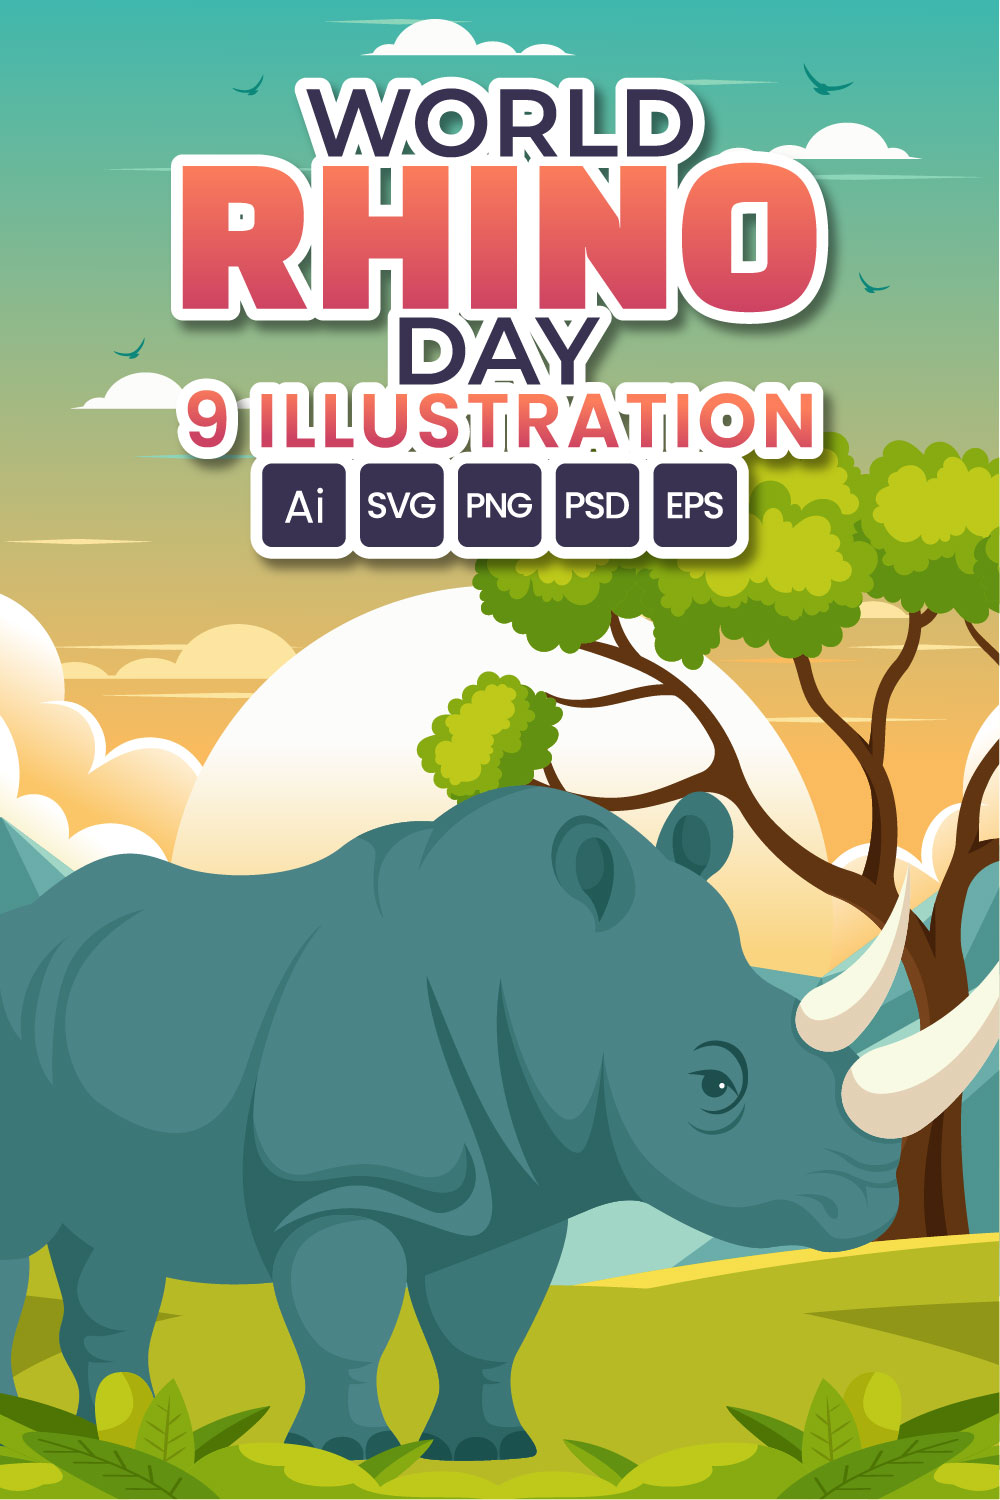 9 World Rhino Day Illustration pinterest preview image.